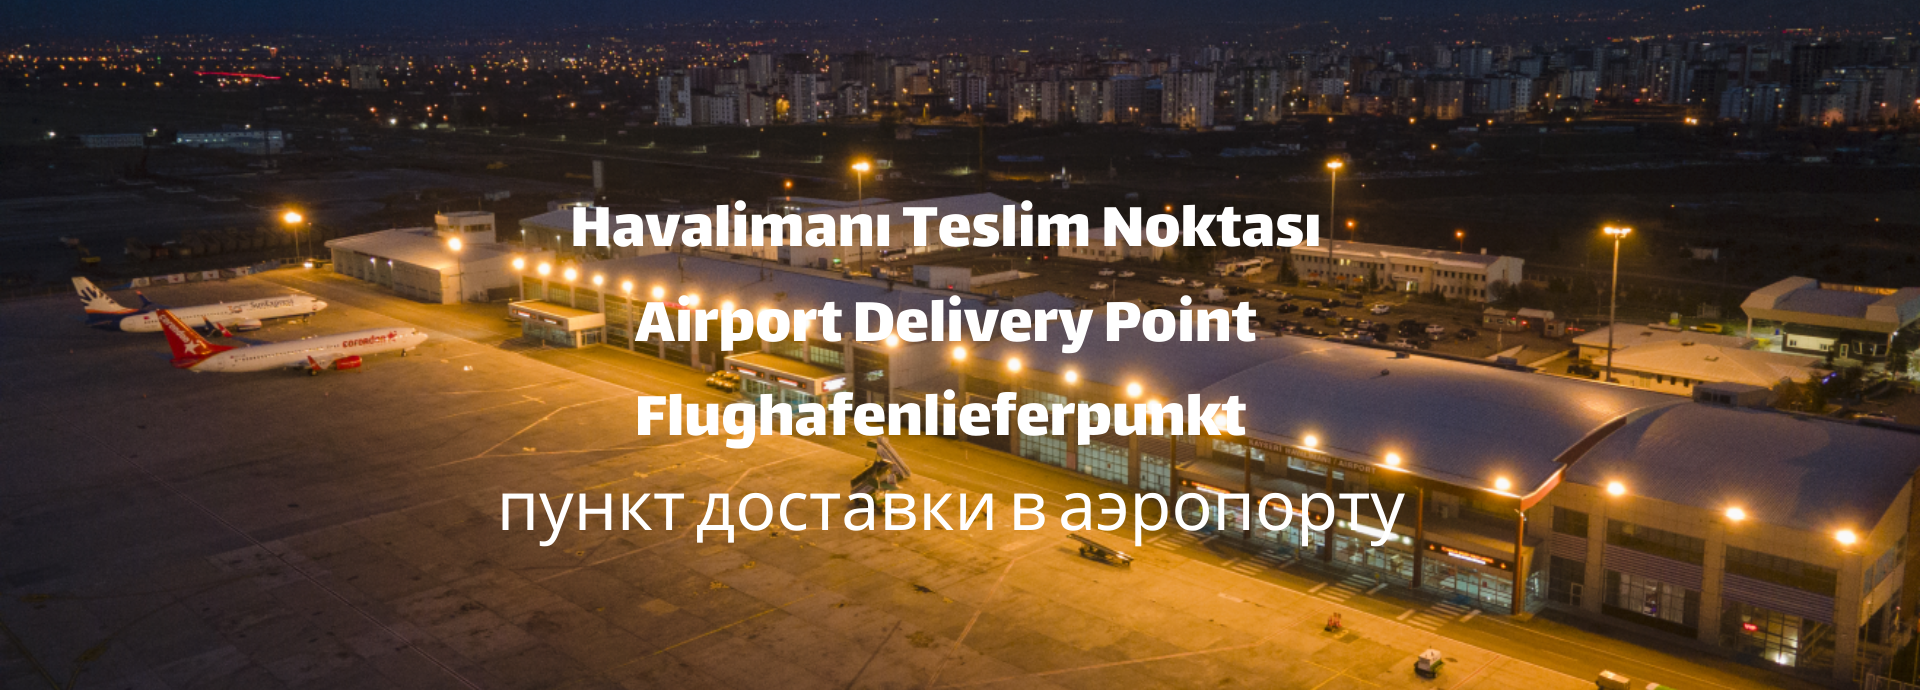 Havalimanı Teslim Noktası - Airport Delivery Point - Flughafenlieferpunkt - пункт доставки в аэропорту